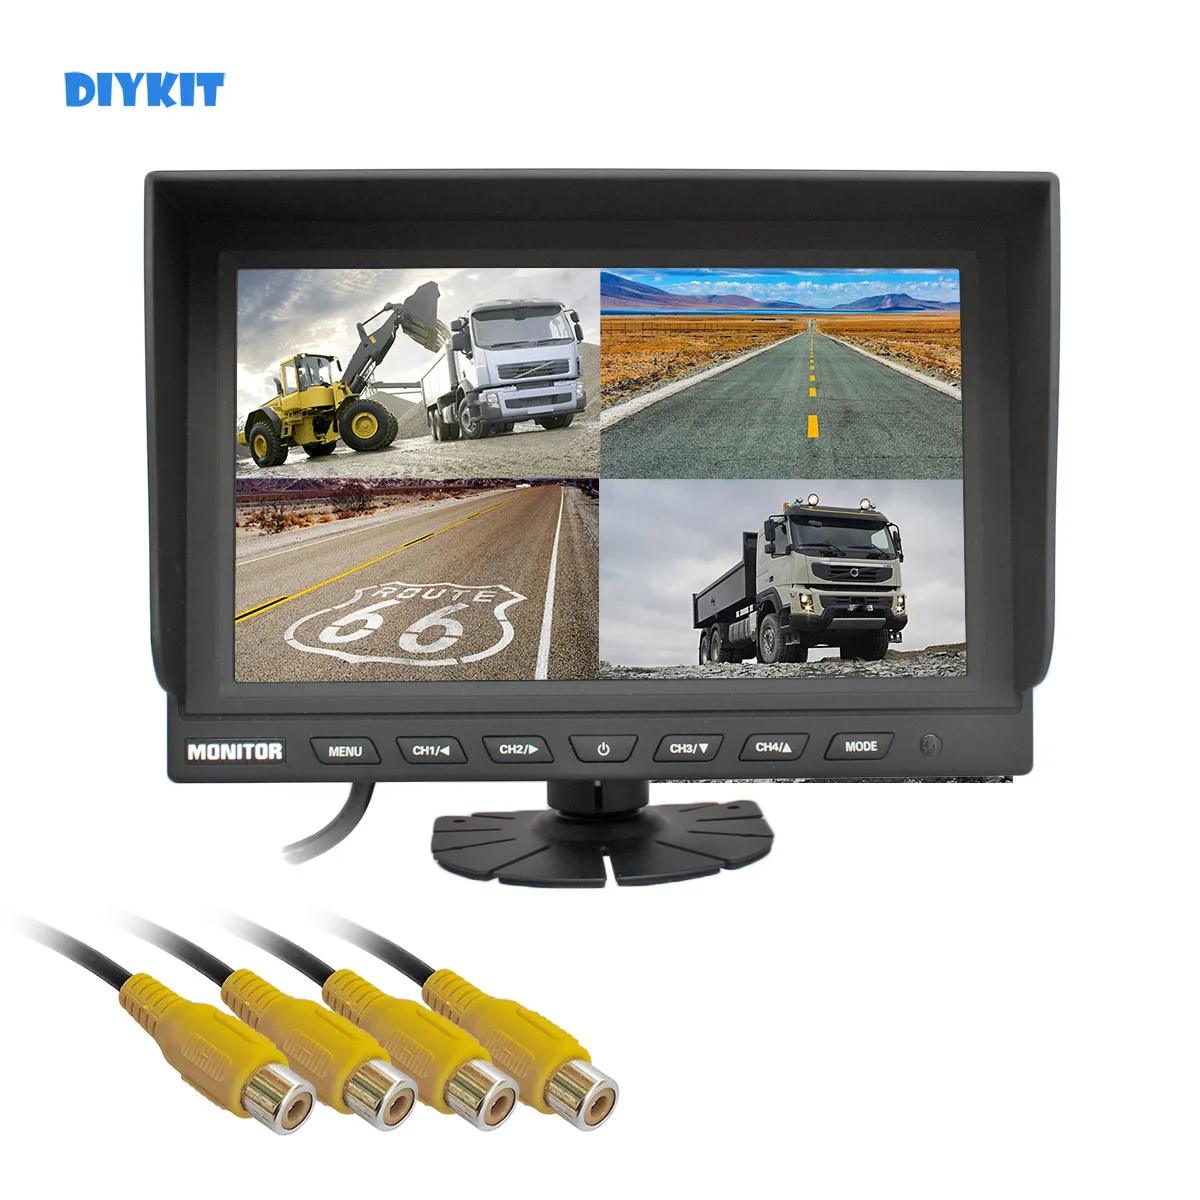 

DIYKIT 9inch Split Quad Display Color Rear View Monitor Car Monitor for Car Truck Bus RV Reversing Camera